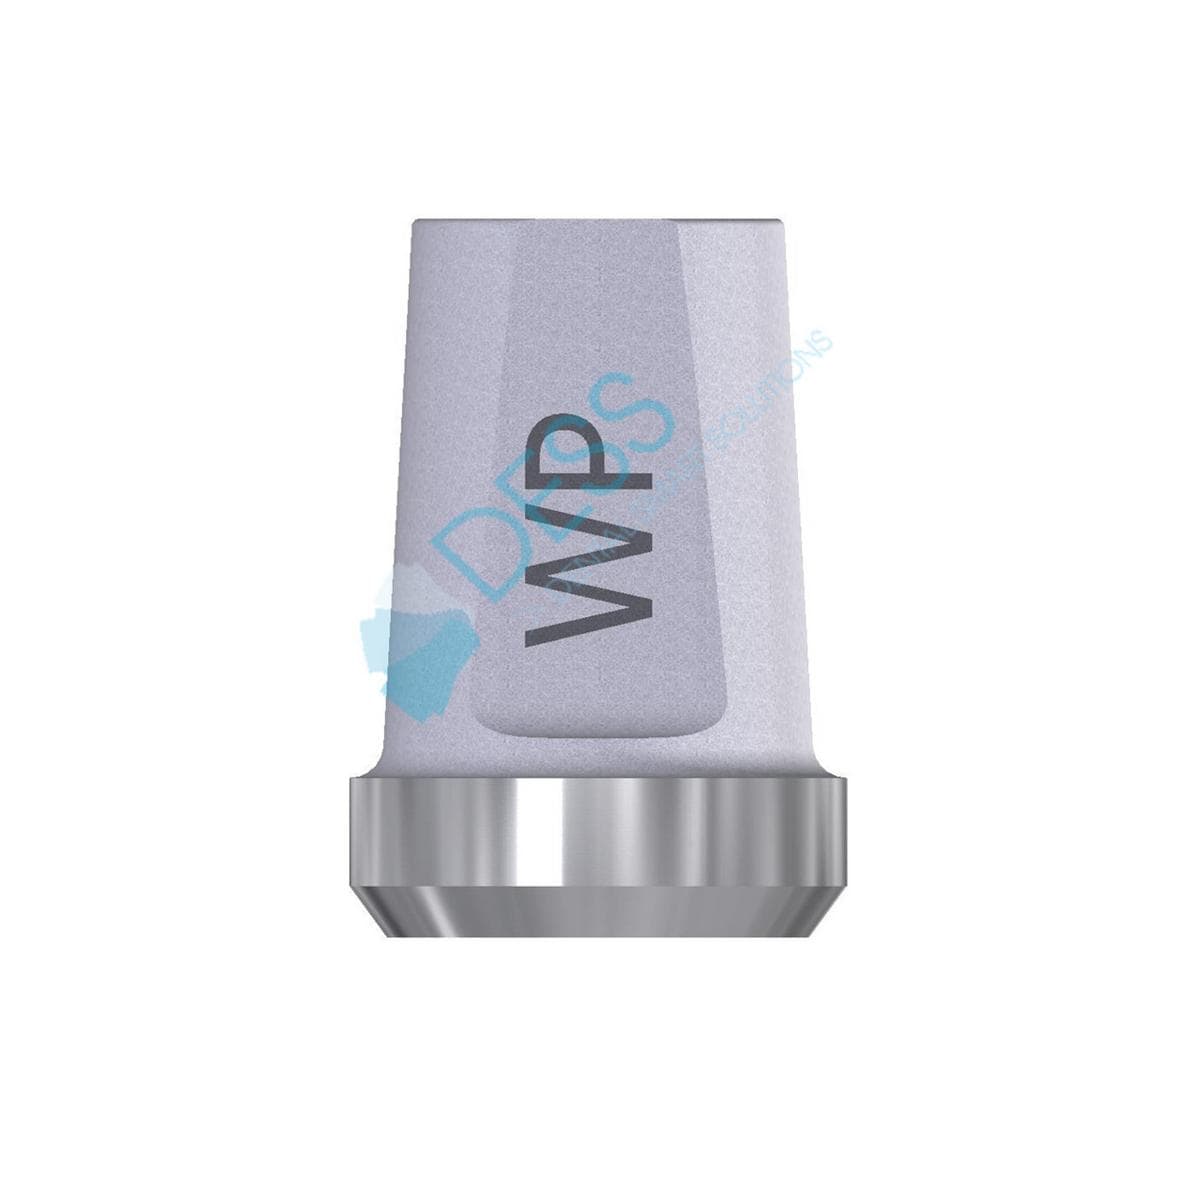 Titanabutment - kompatibel mit 3i® Osseotite® - WP Ø 5,0 mm, 0° gewinkelt